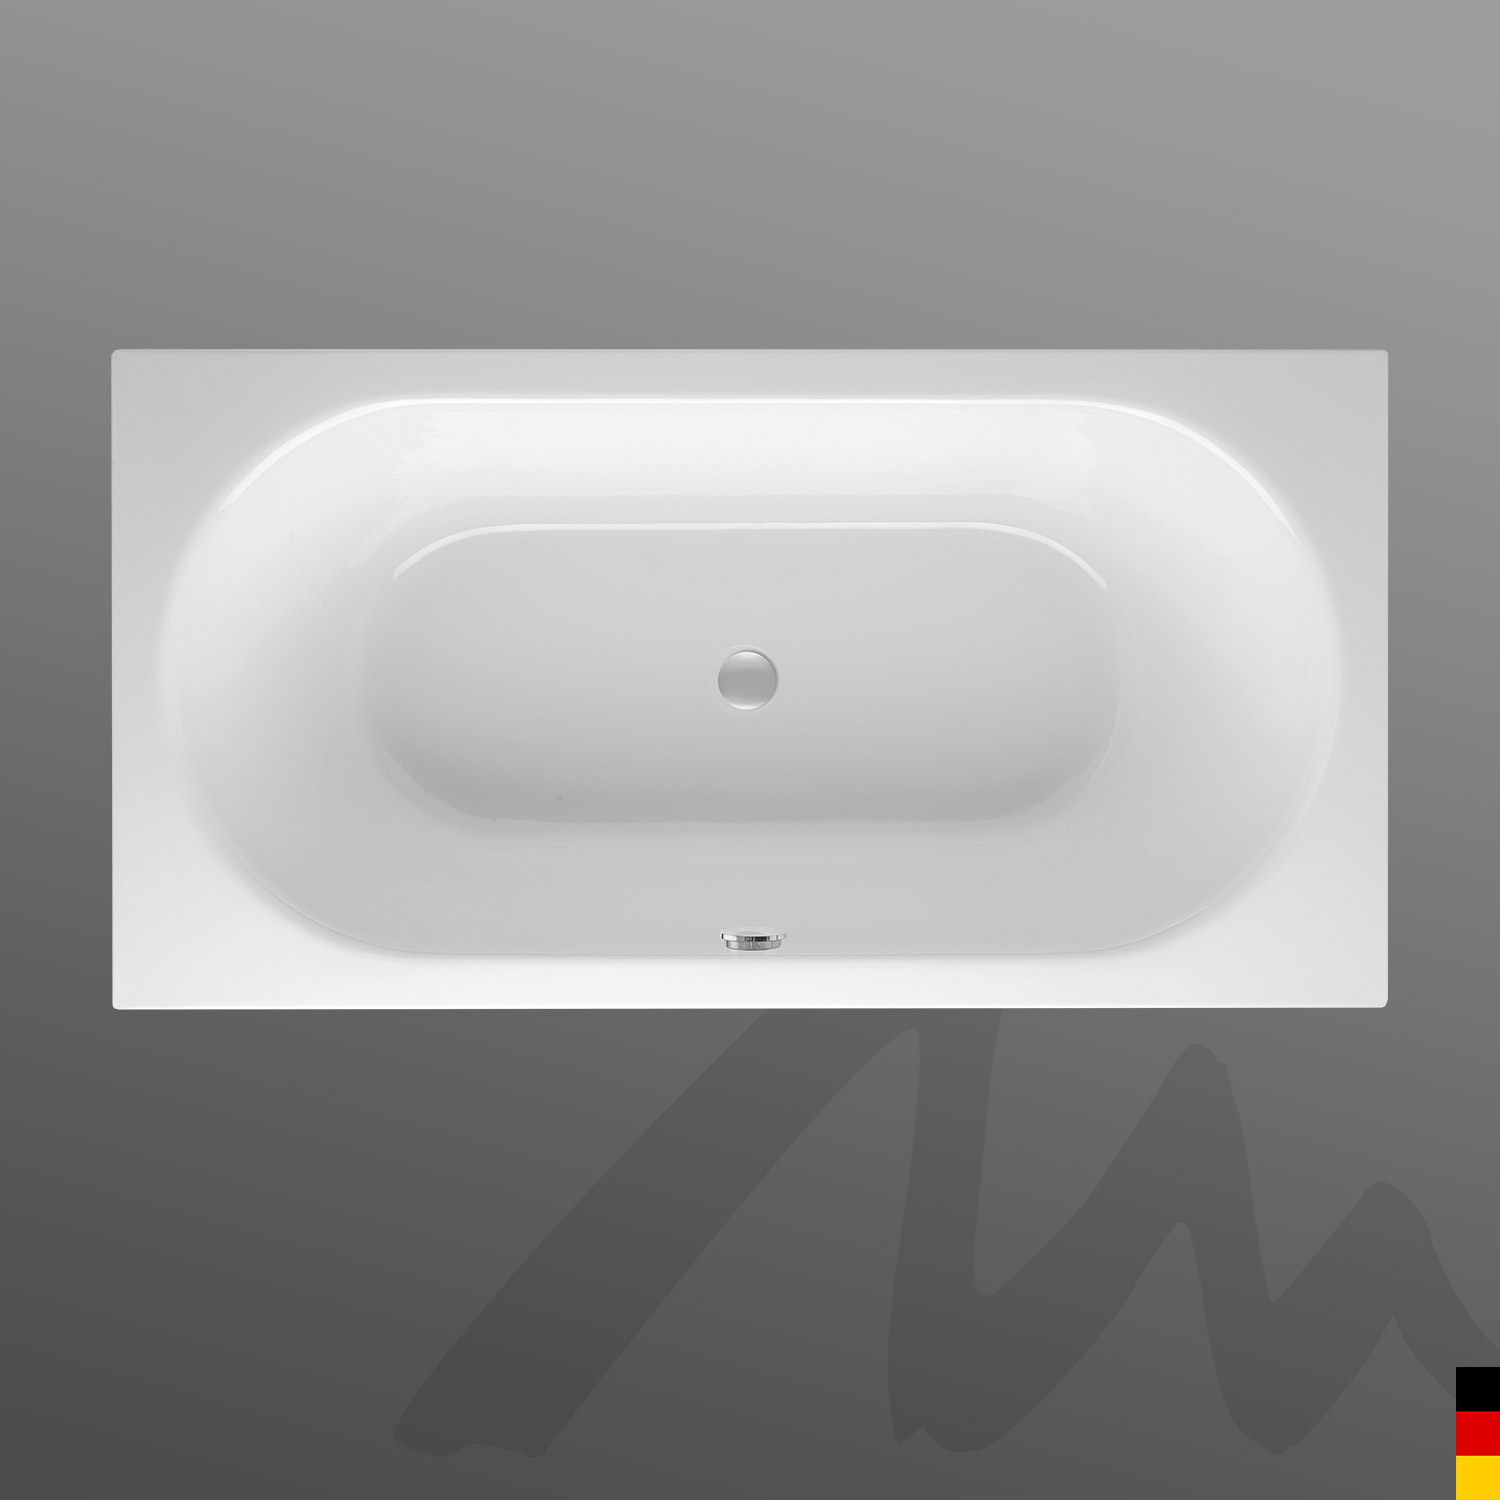 Mauersberger Badewanne Rechteck Ausana 190/95 duo  190x95x46cm  Farbe:weiß